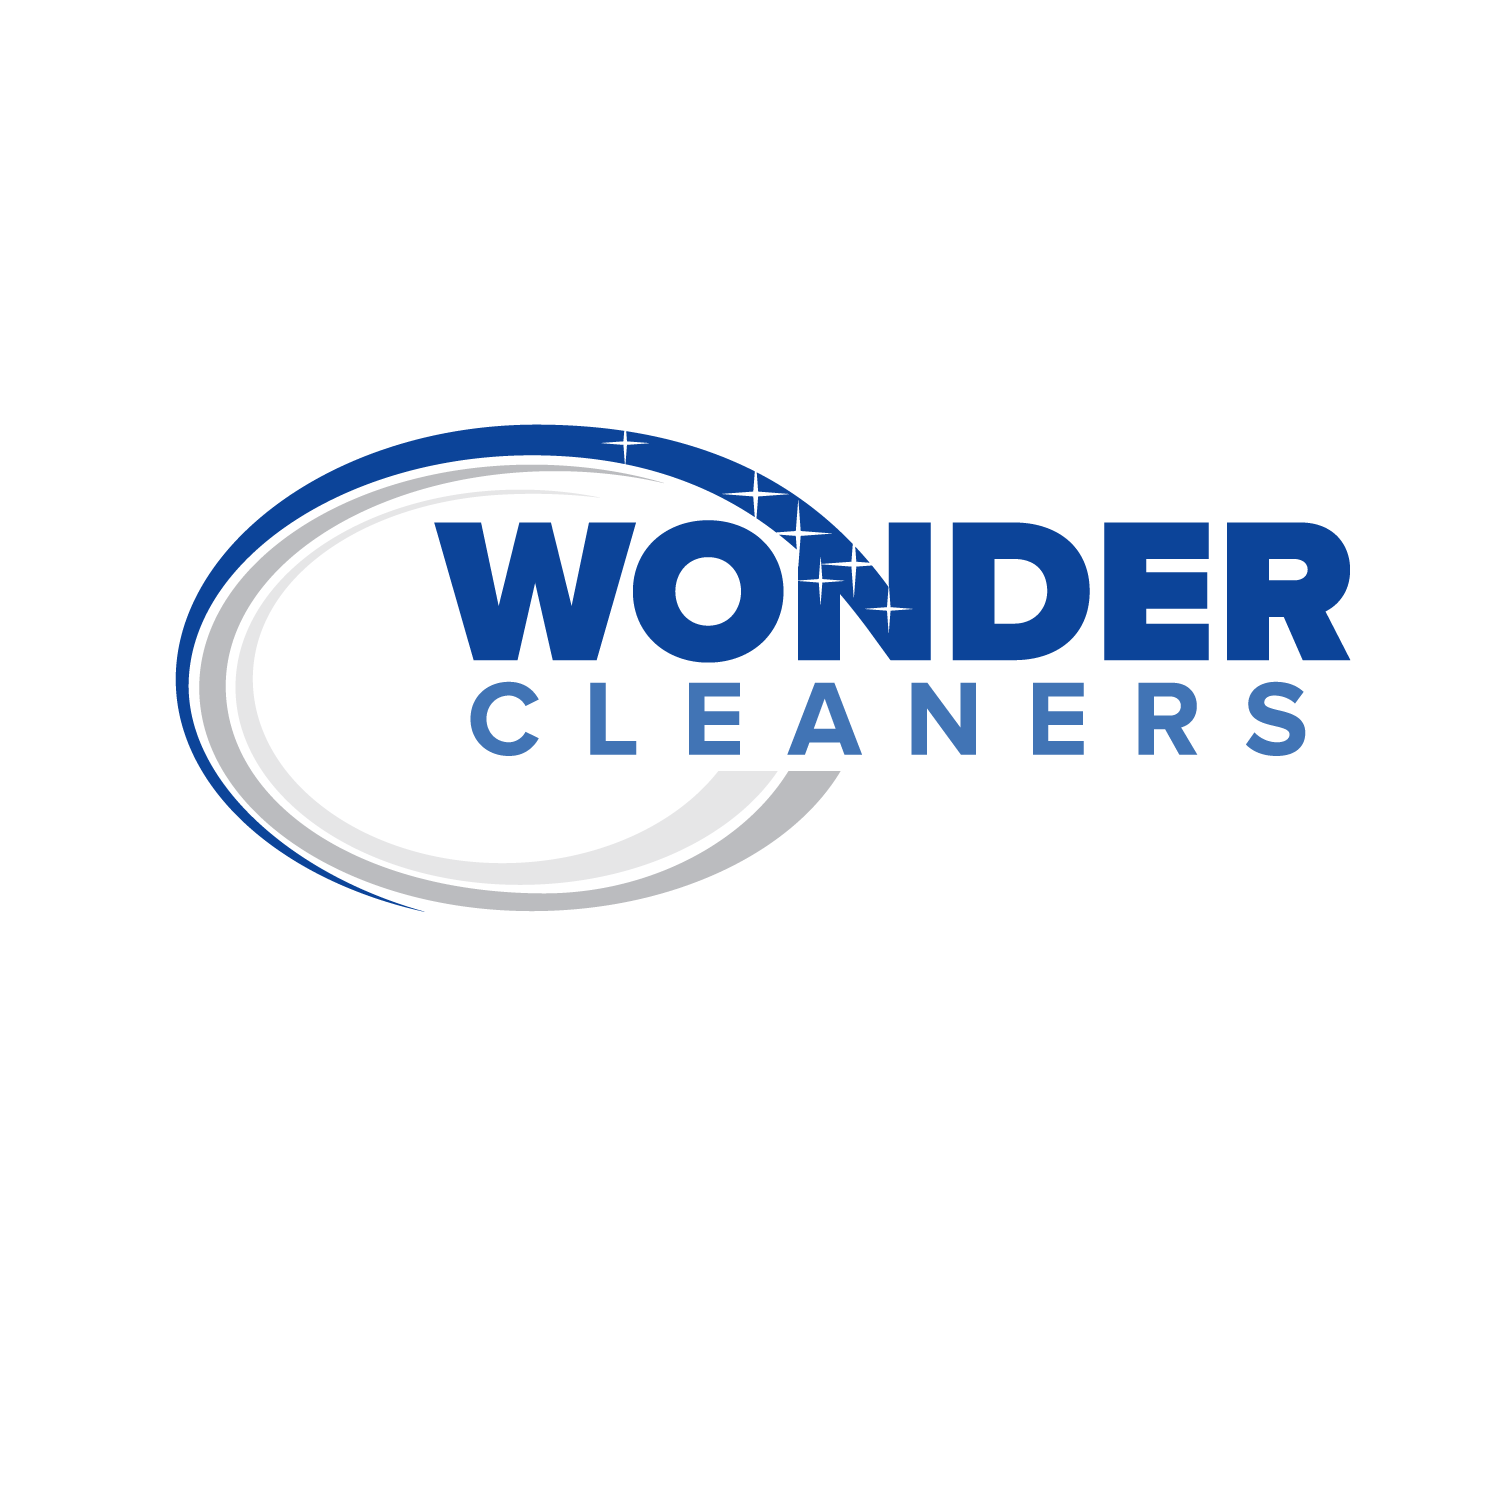 CC Lightning Logo - Modern, Masculine, House Cleaning Logo Design for Wonder Cleaners